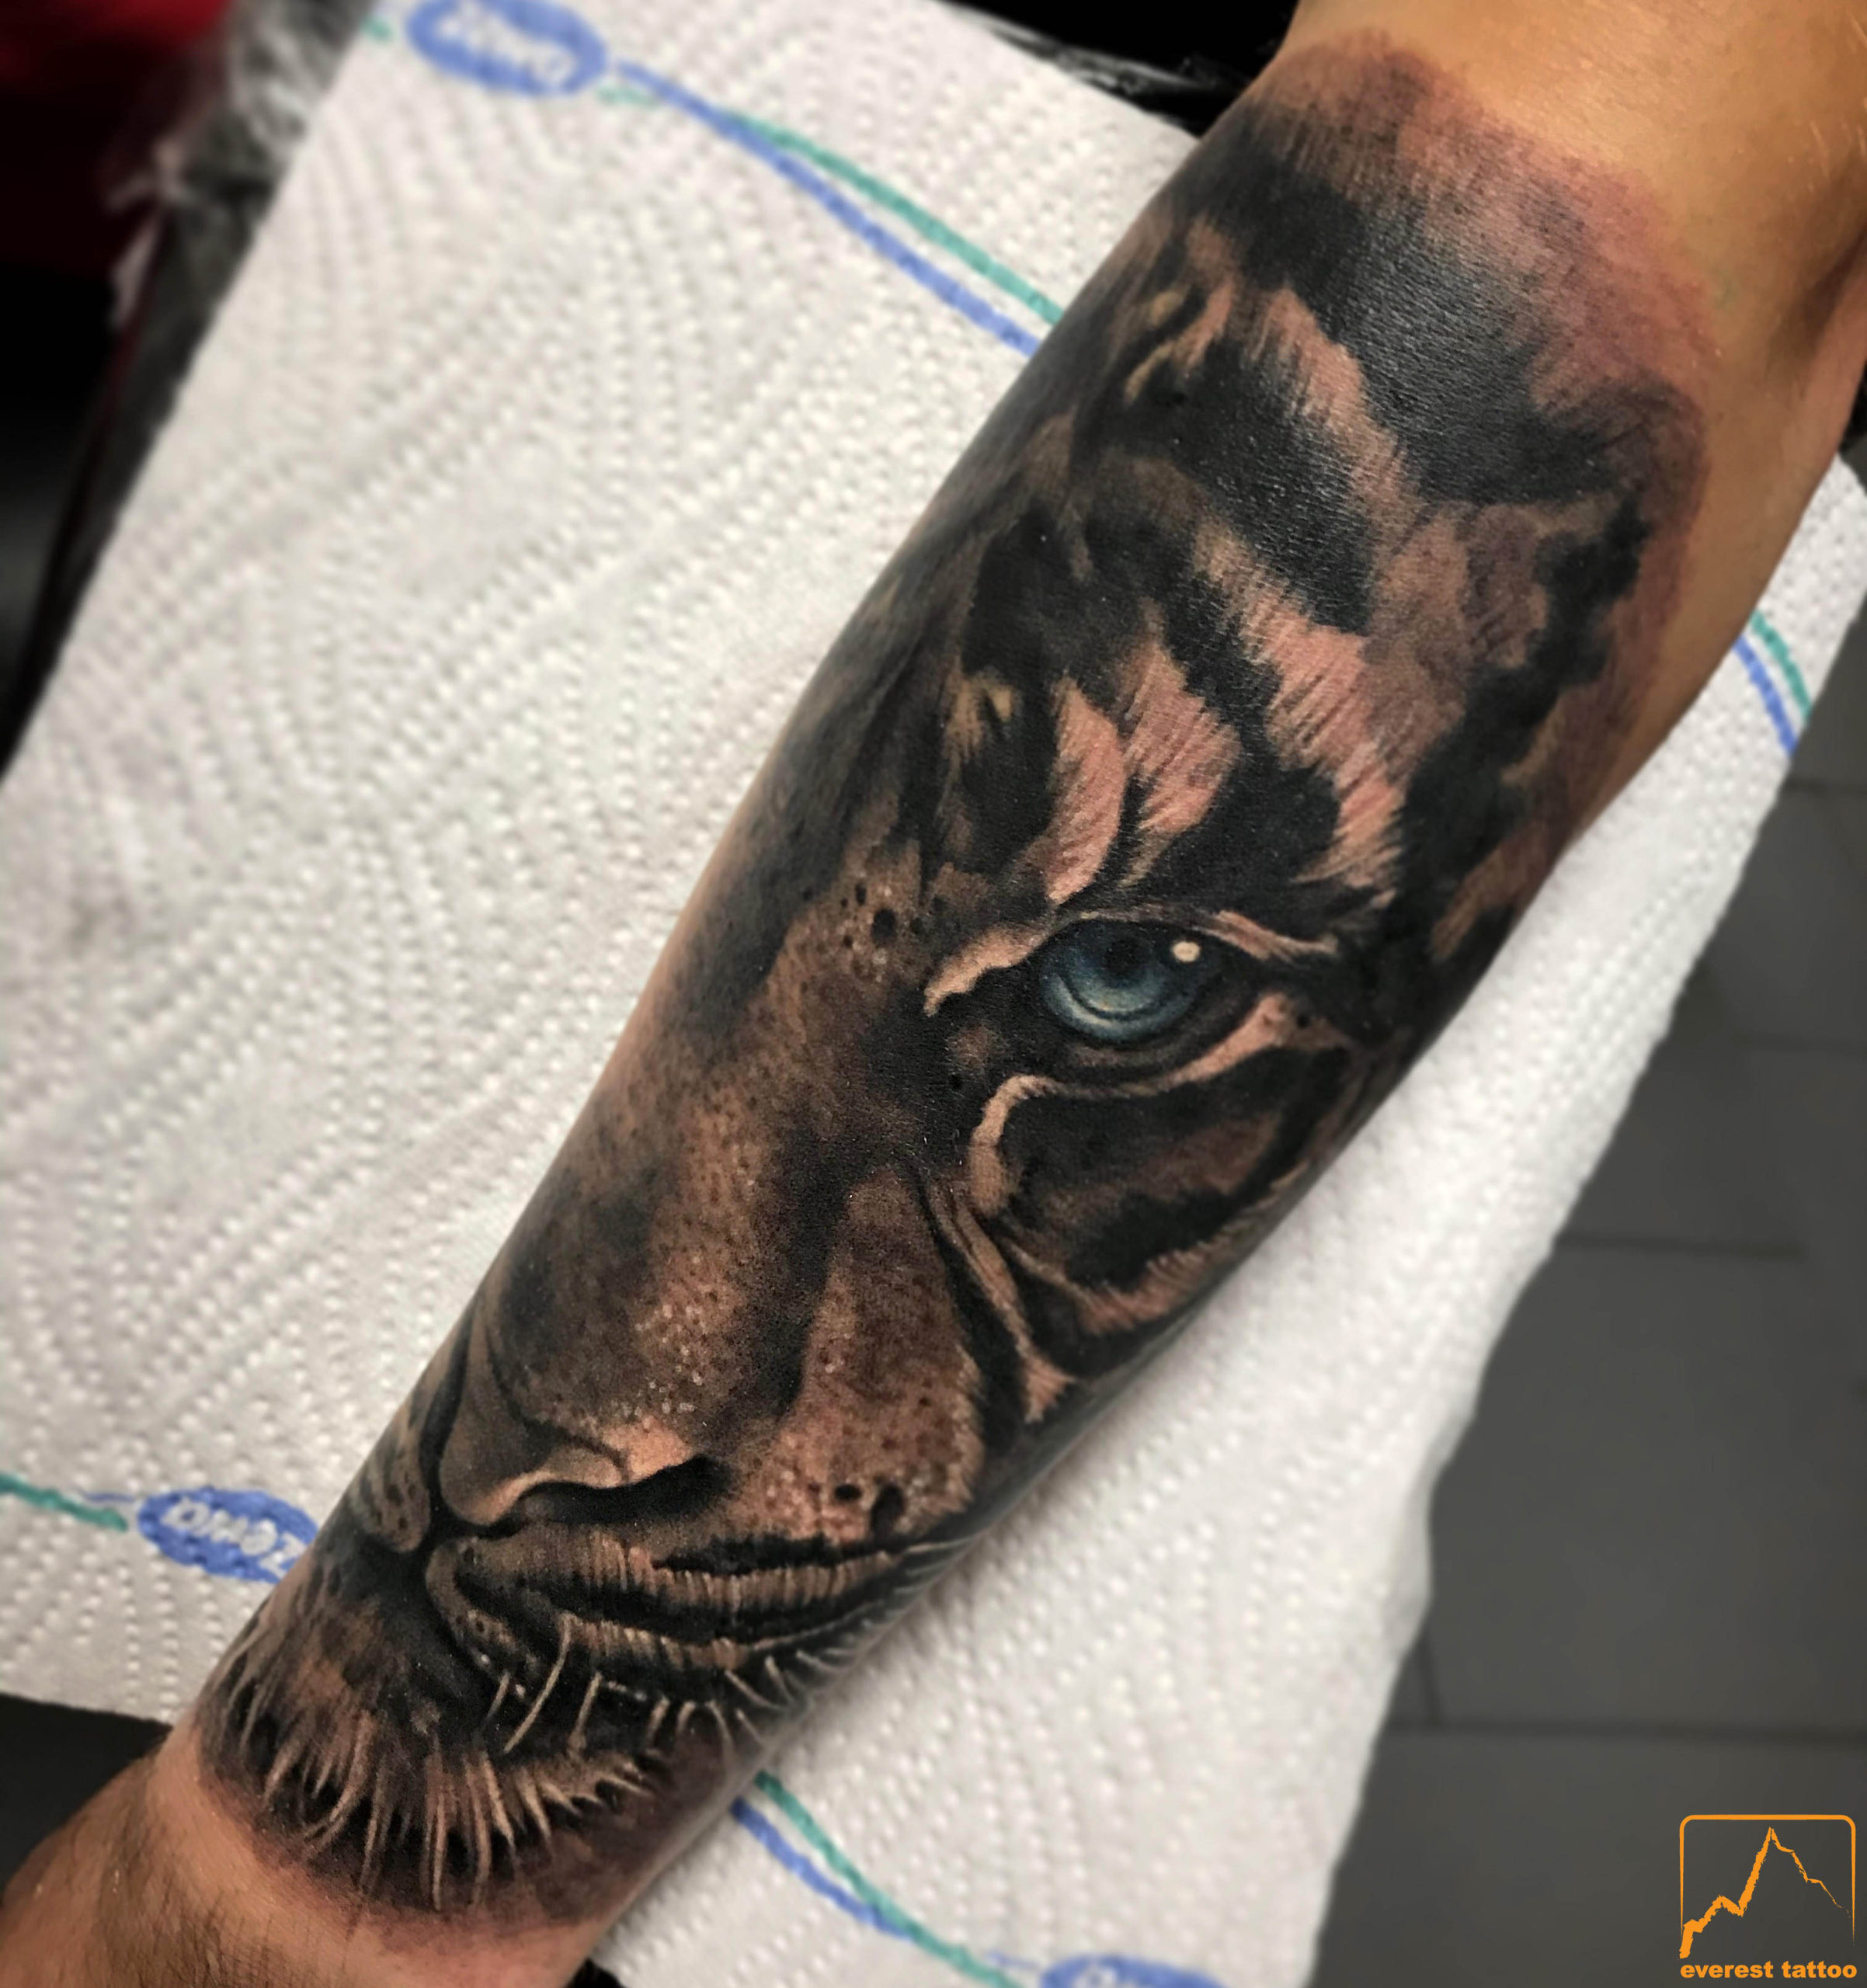 everest tattoo studio tigris tiger Annie Bee Buda piercing